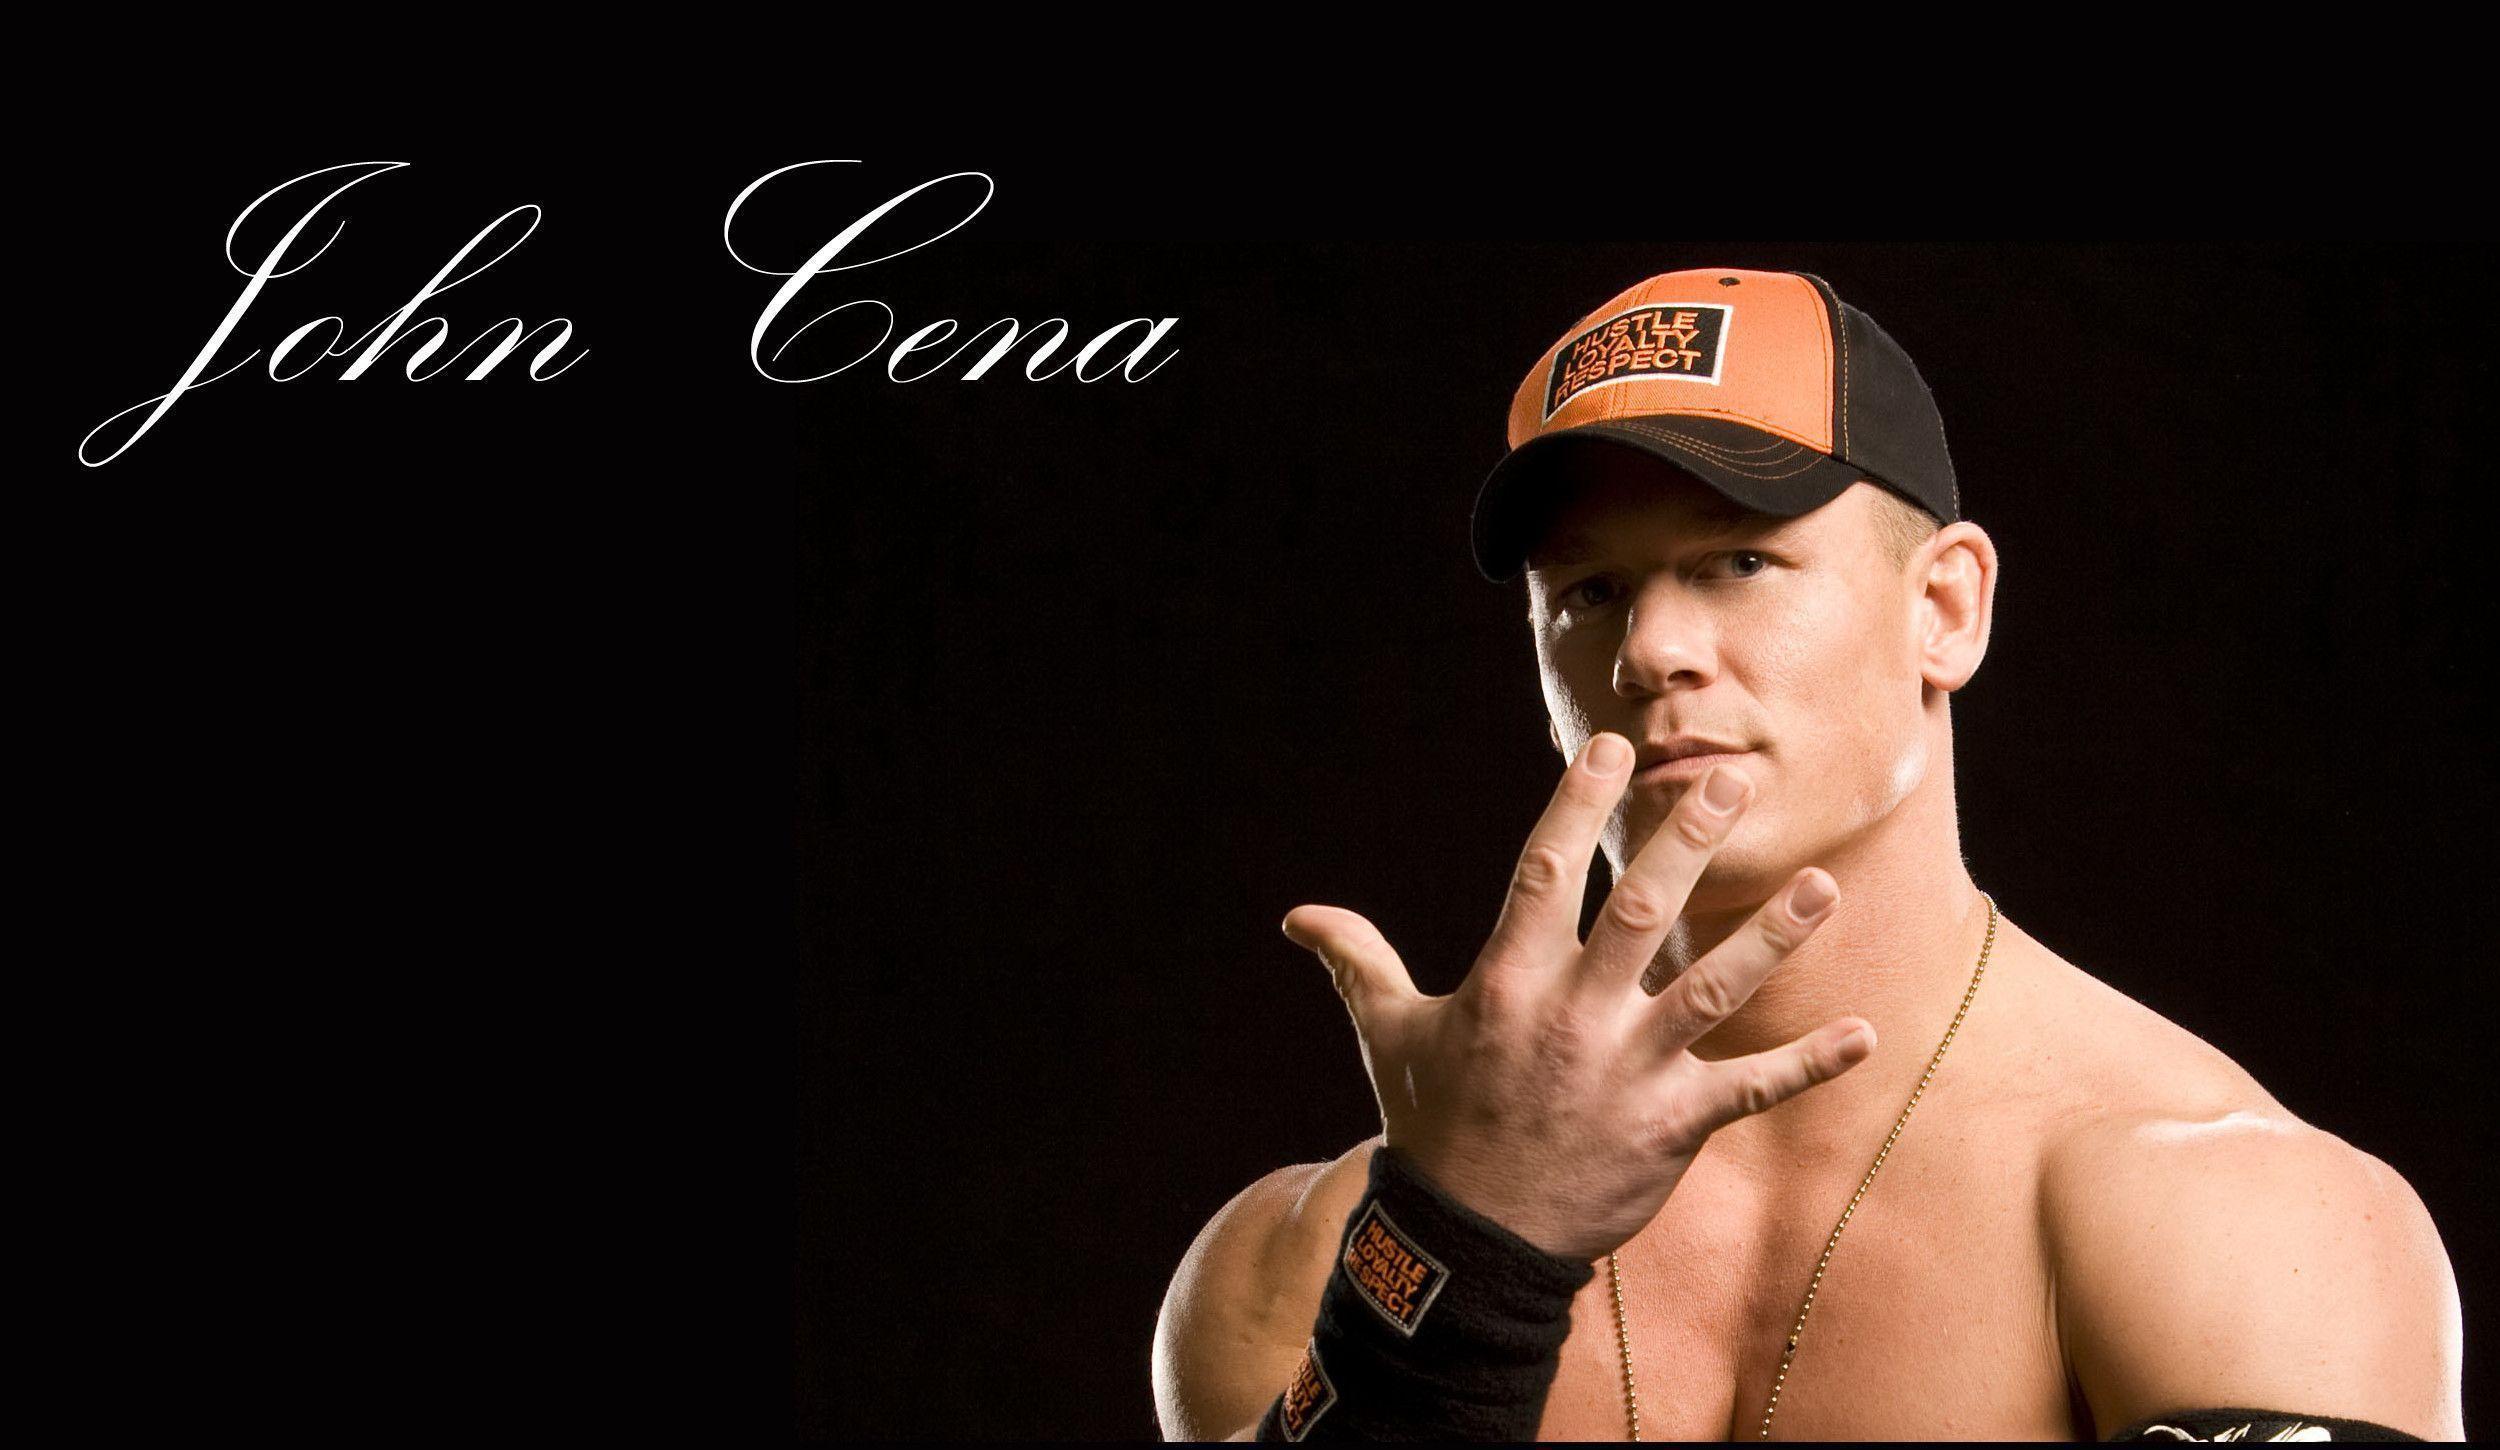 Best Photo Gallery of John Cena Wallpaper Free DownloadHD